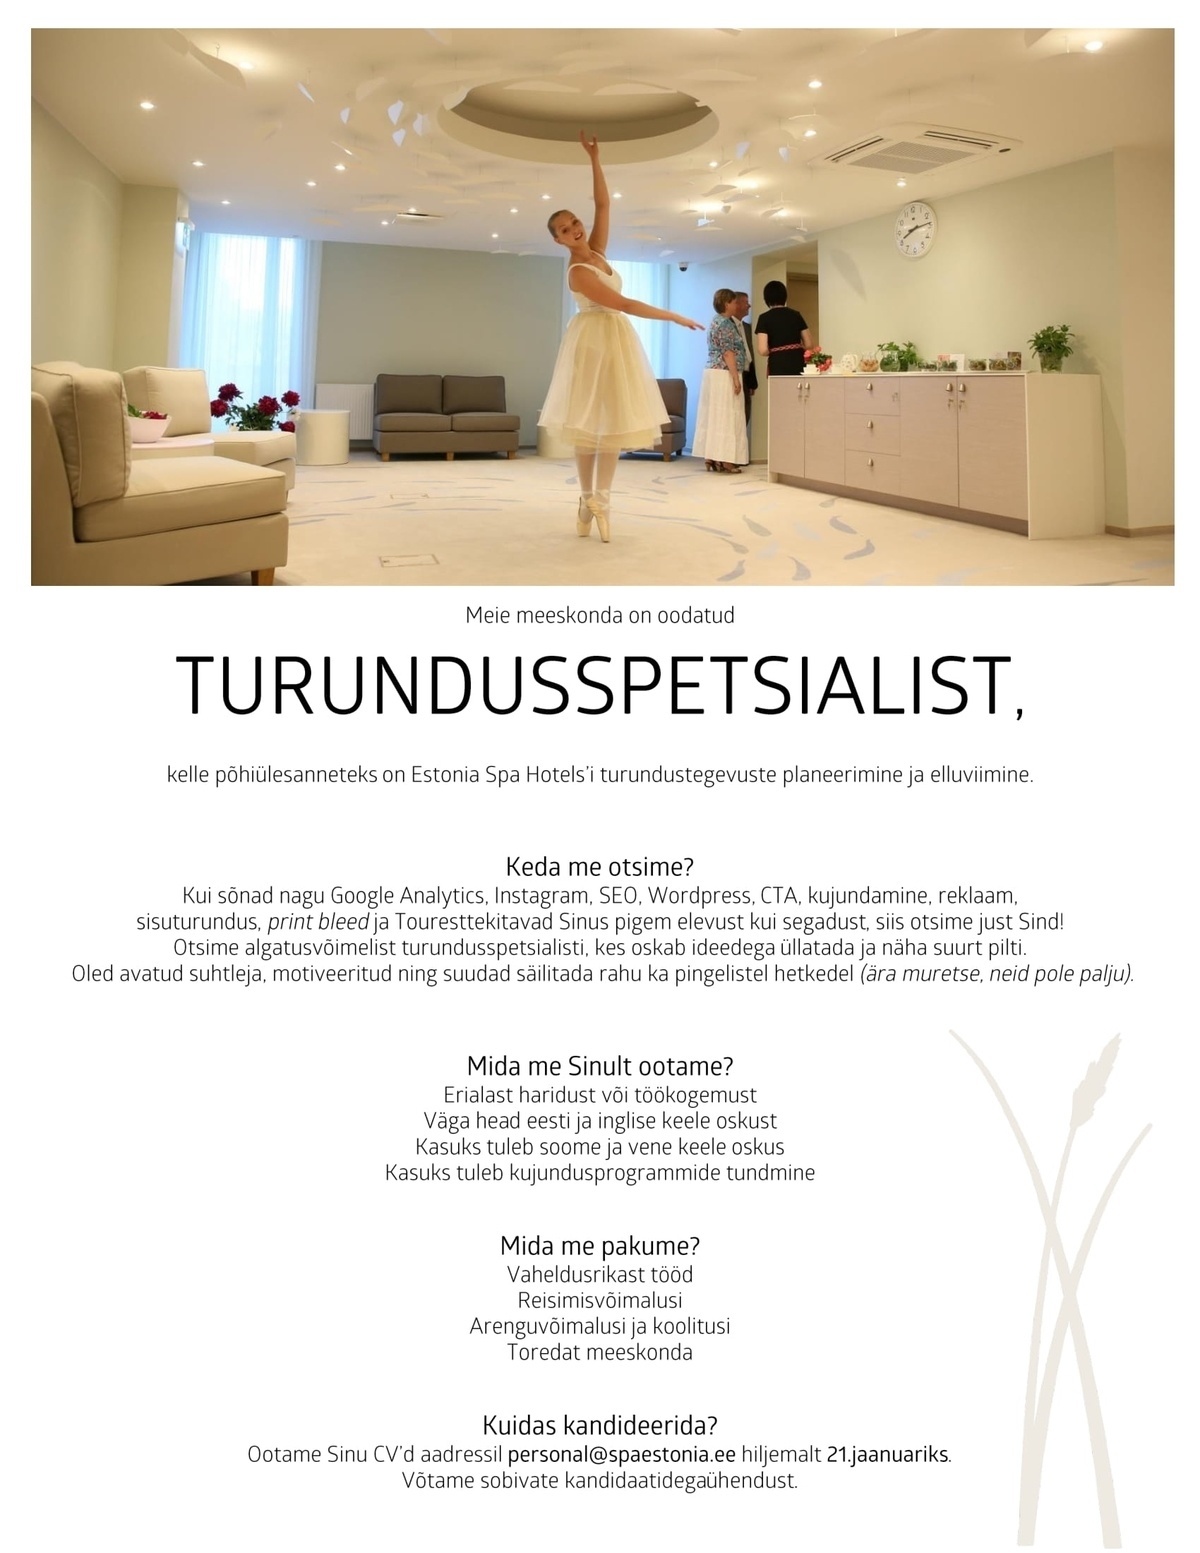 Estonia Spa Hotels AS Turundusspetsialist